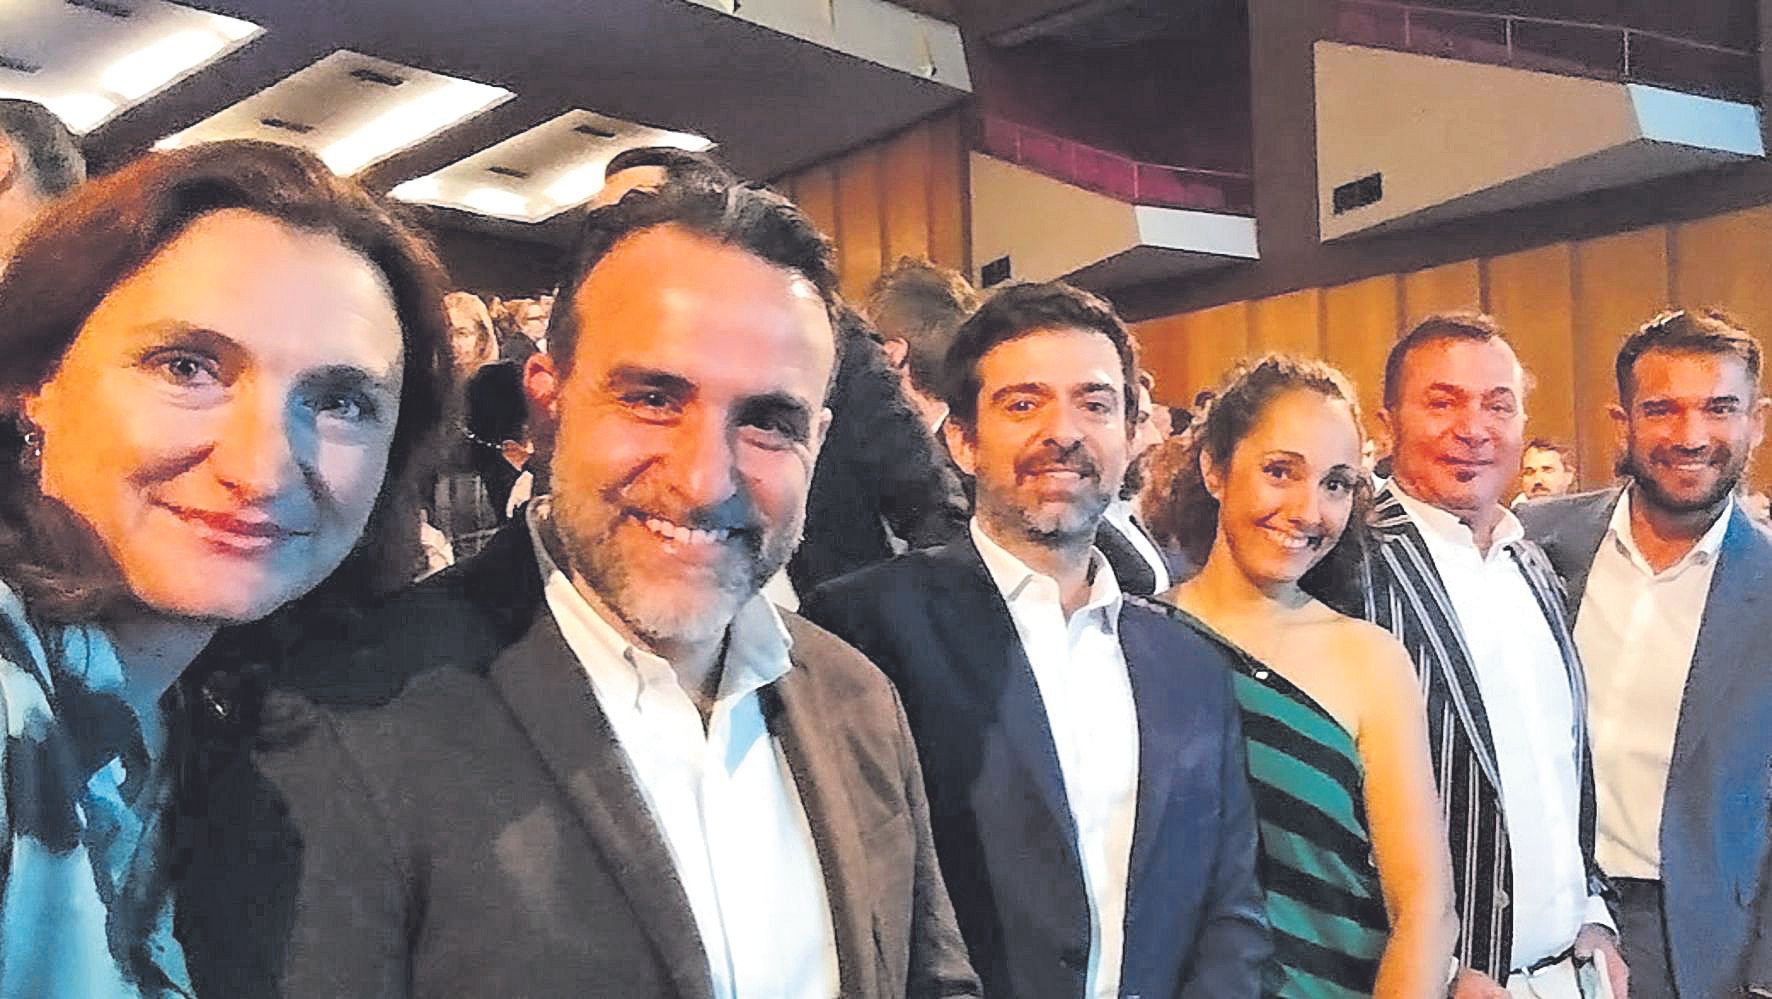 Cati Mateu, Rafel Ballester, Juan Ordín, Vanessa Sánchez, Agustín El Casta y Éric Jareño.